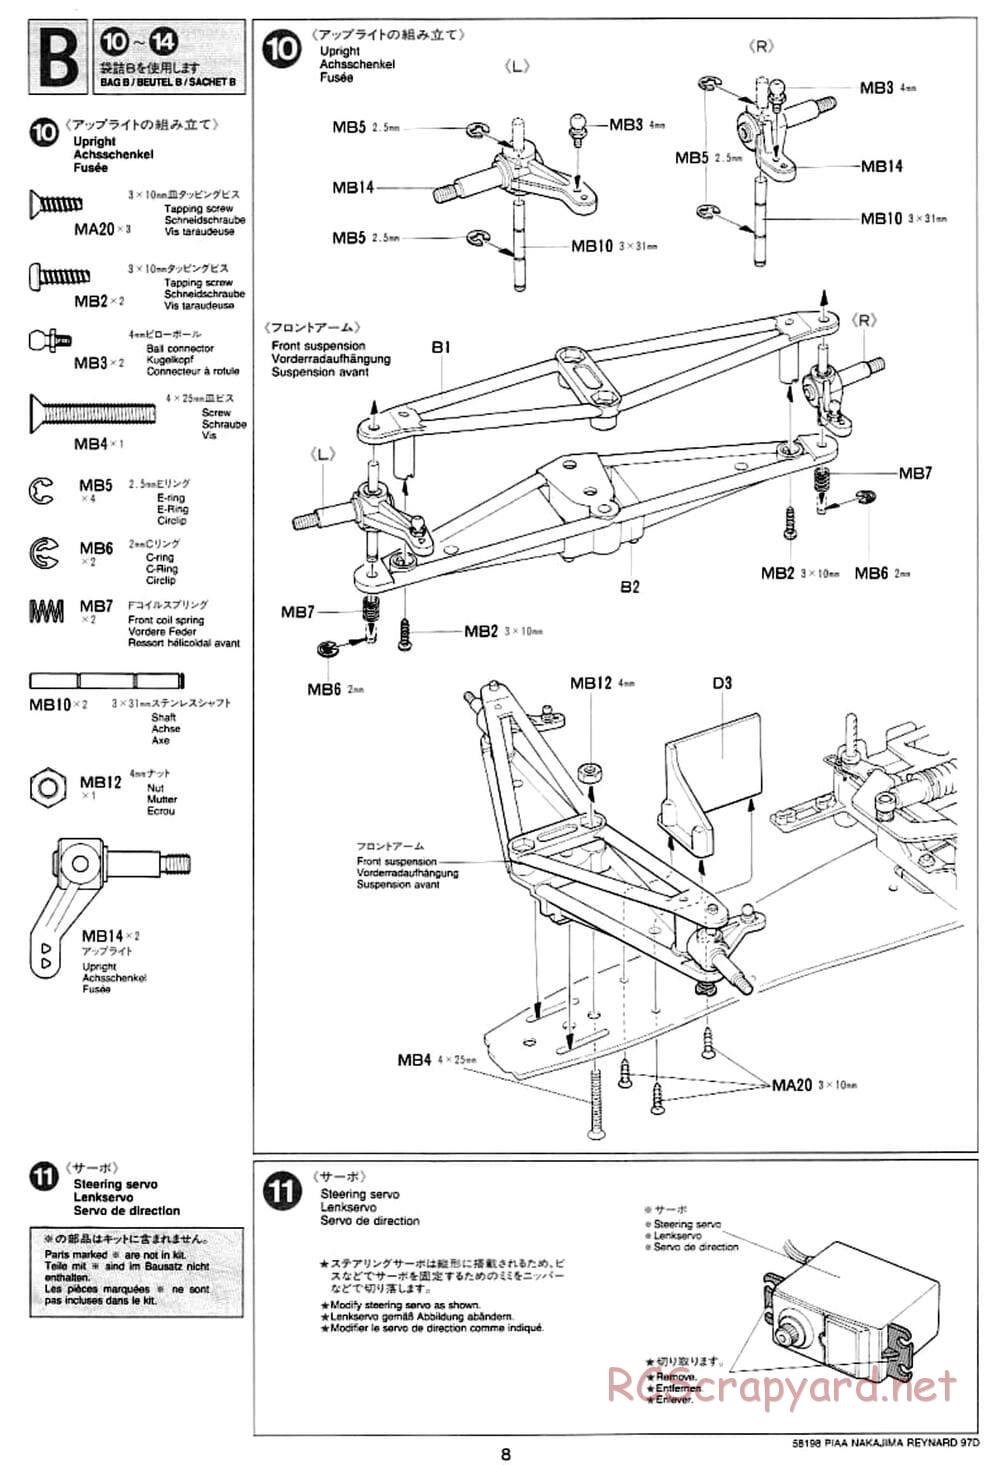 Tamiya - PIAA Nakajima Reynard 97D - F103 Chassis - Manual - Page 8